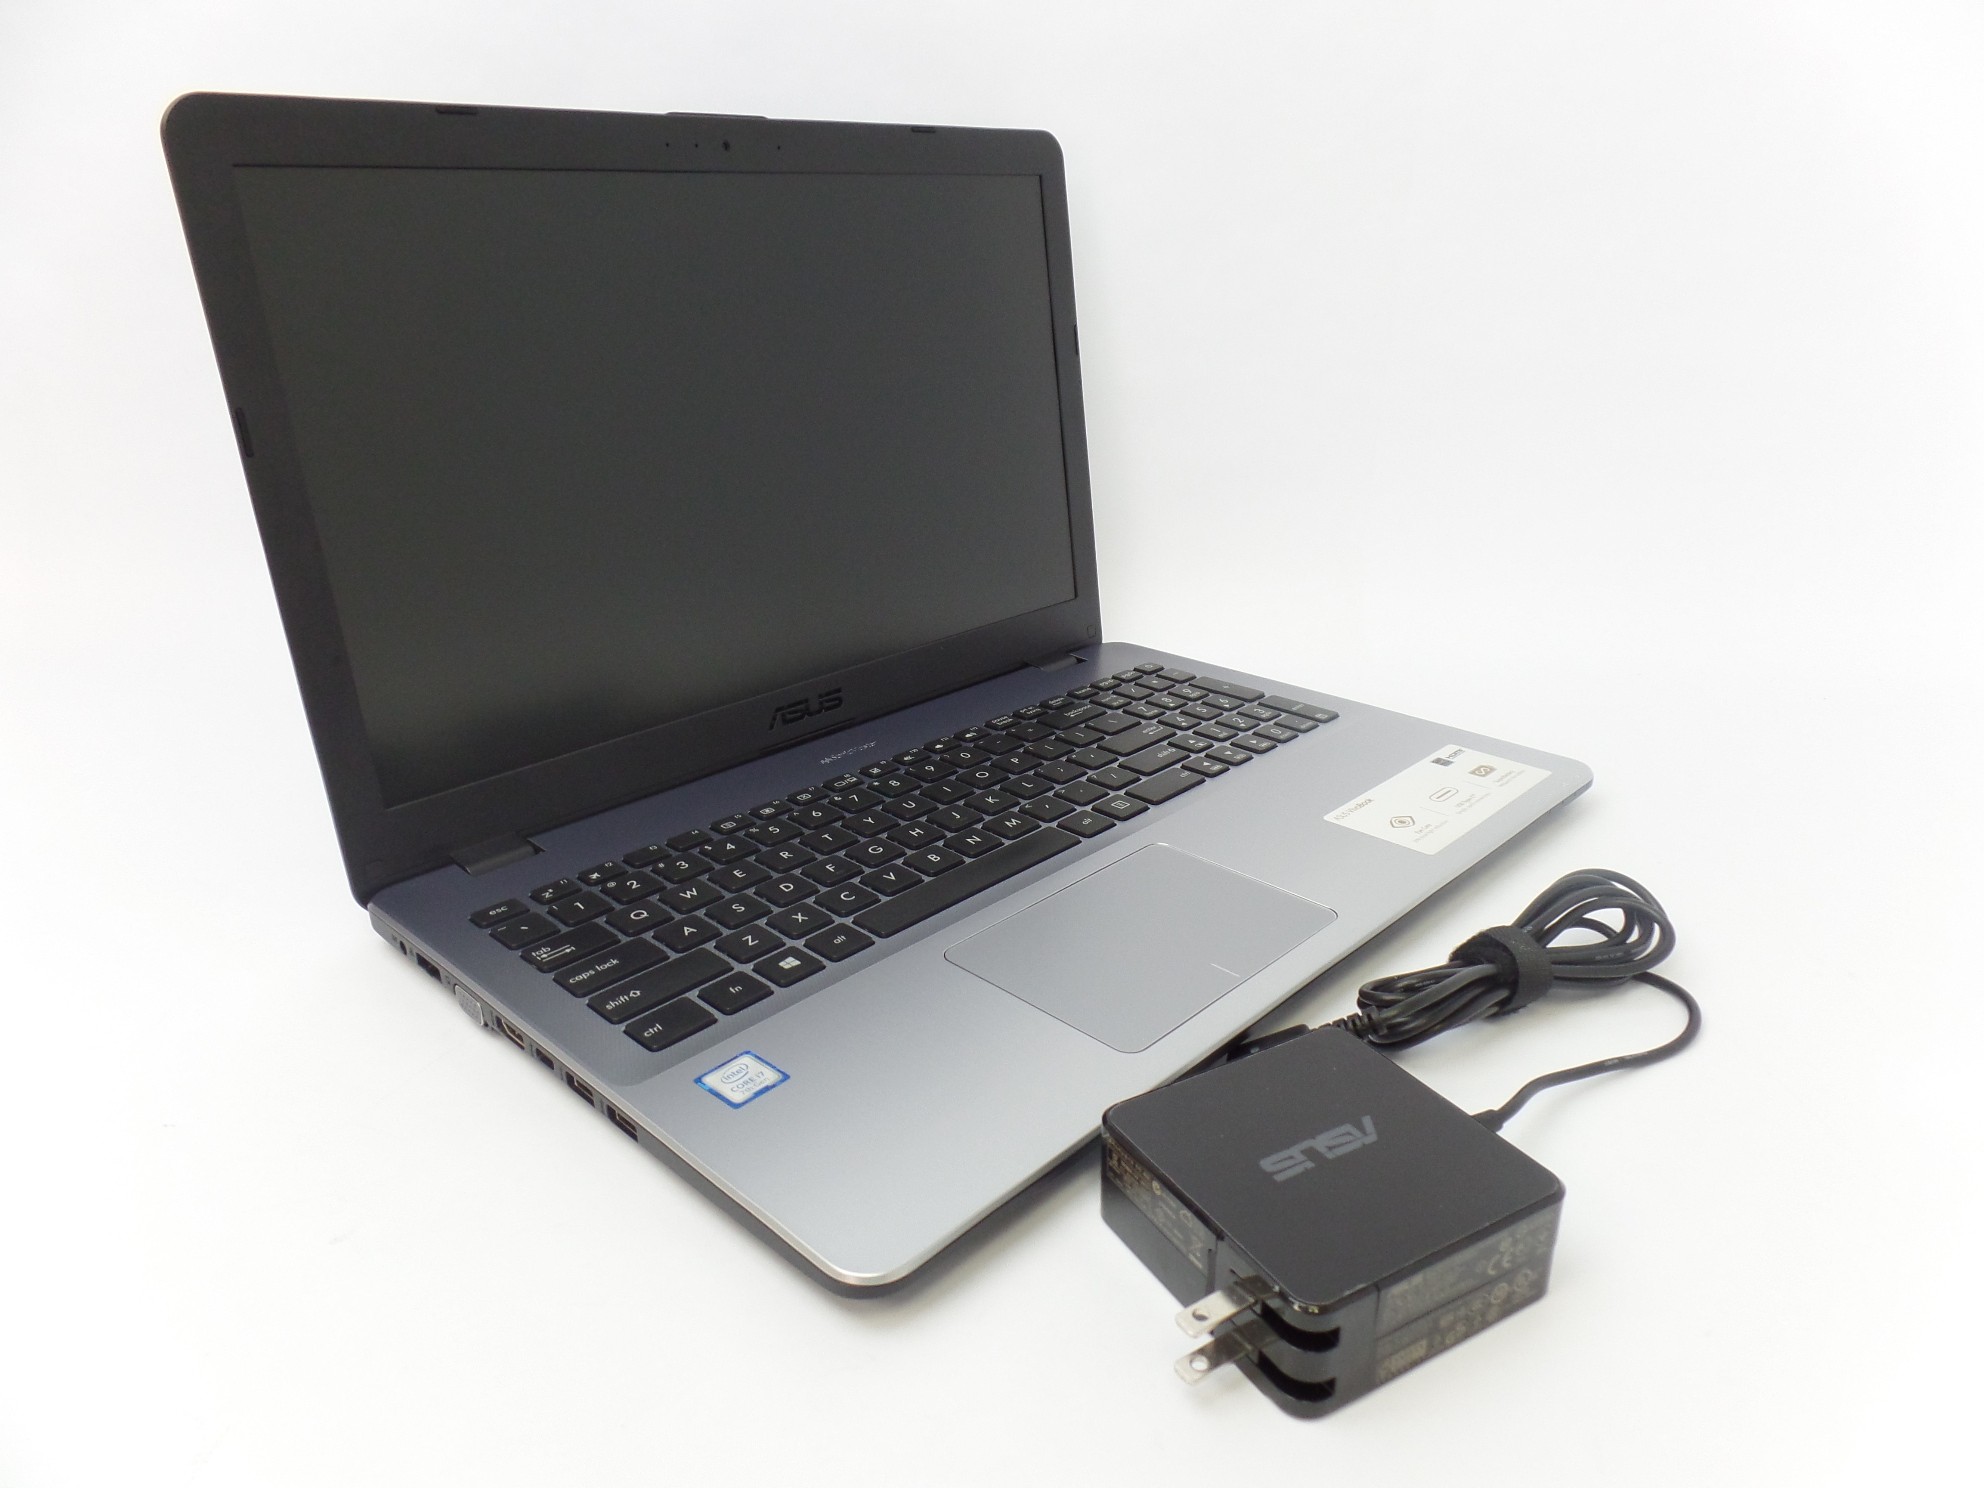 Asus VivoBook F542UA-DH71 15.6" FHD i7-7500U 2.7GHz 8GB 256GB SSD W10H Laptop SD